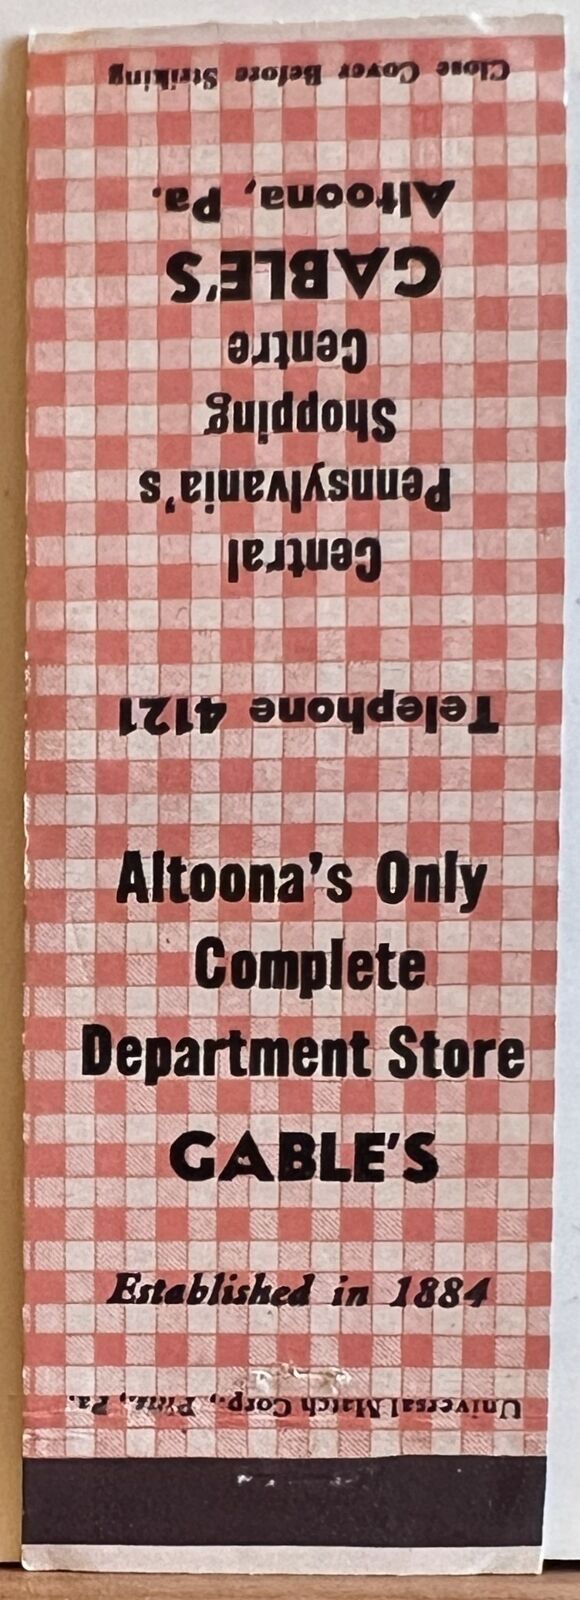 Gable\'s Department Store Altoona PA Pennsylvania Vintage Matchbook Cover